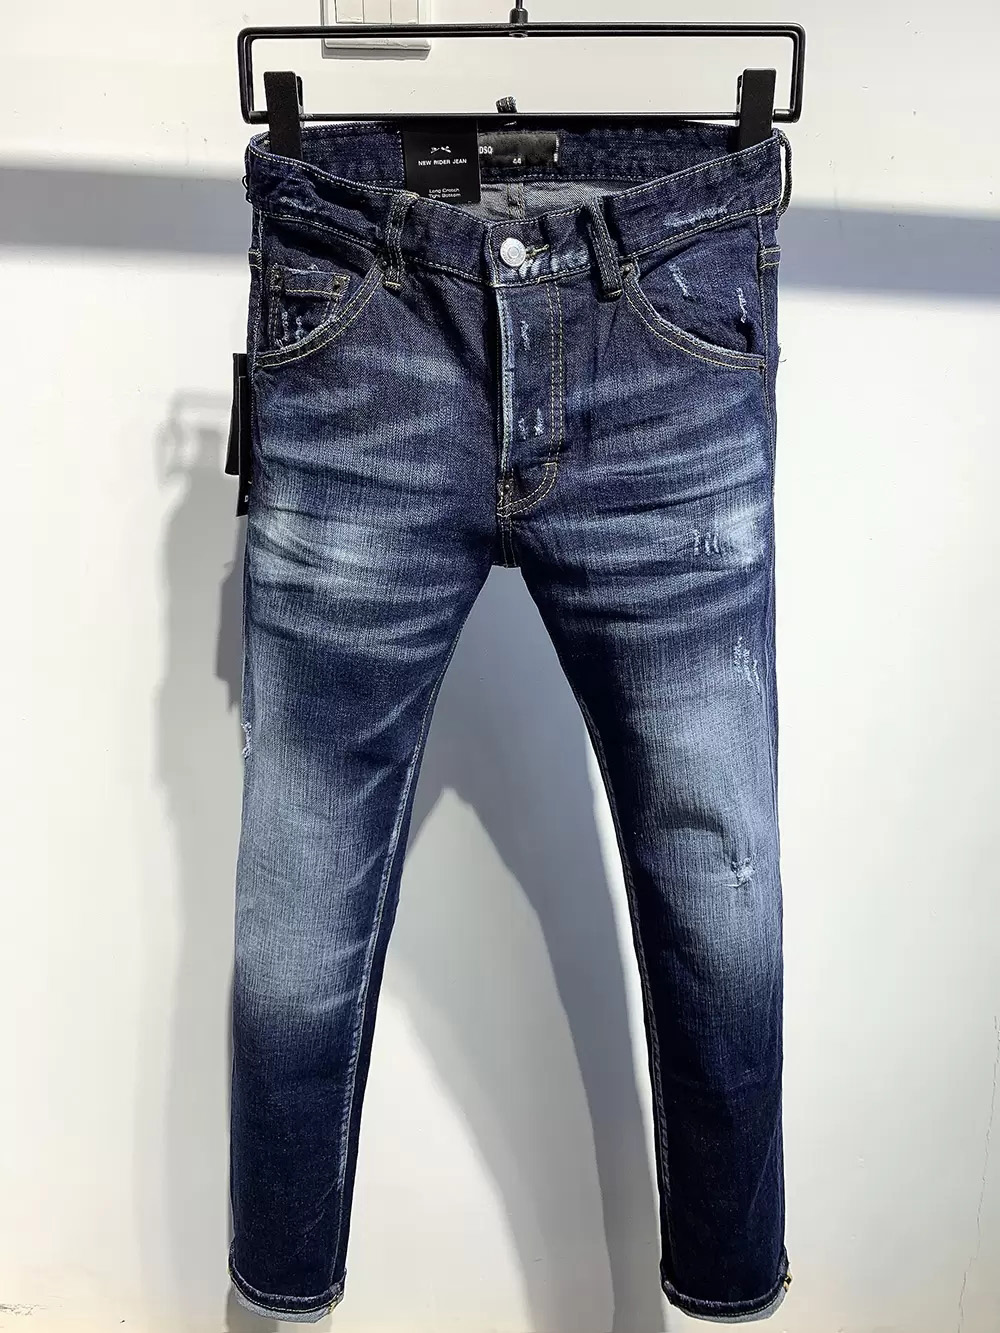 

DSQ2 Classic Fashion Man Jeans blue Hip Hop Rock Moto Mens Casual Design Ripped Jeans Distressed Skinny Denim Biker DSQ Jeans for men 9811, Blue color 9811